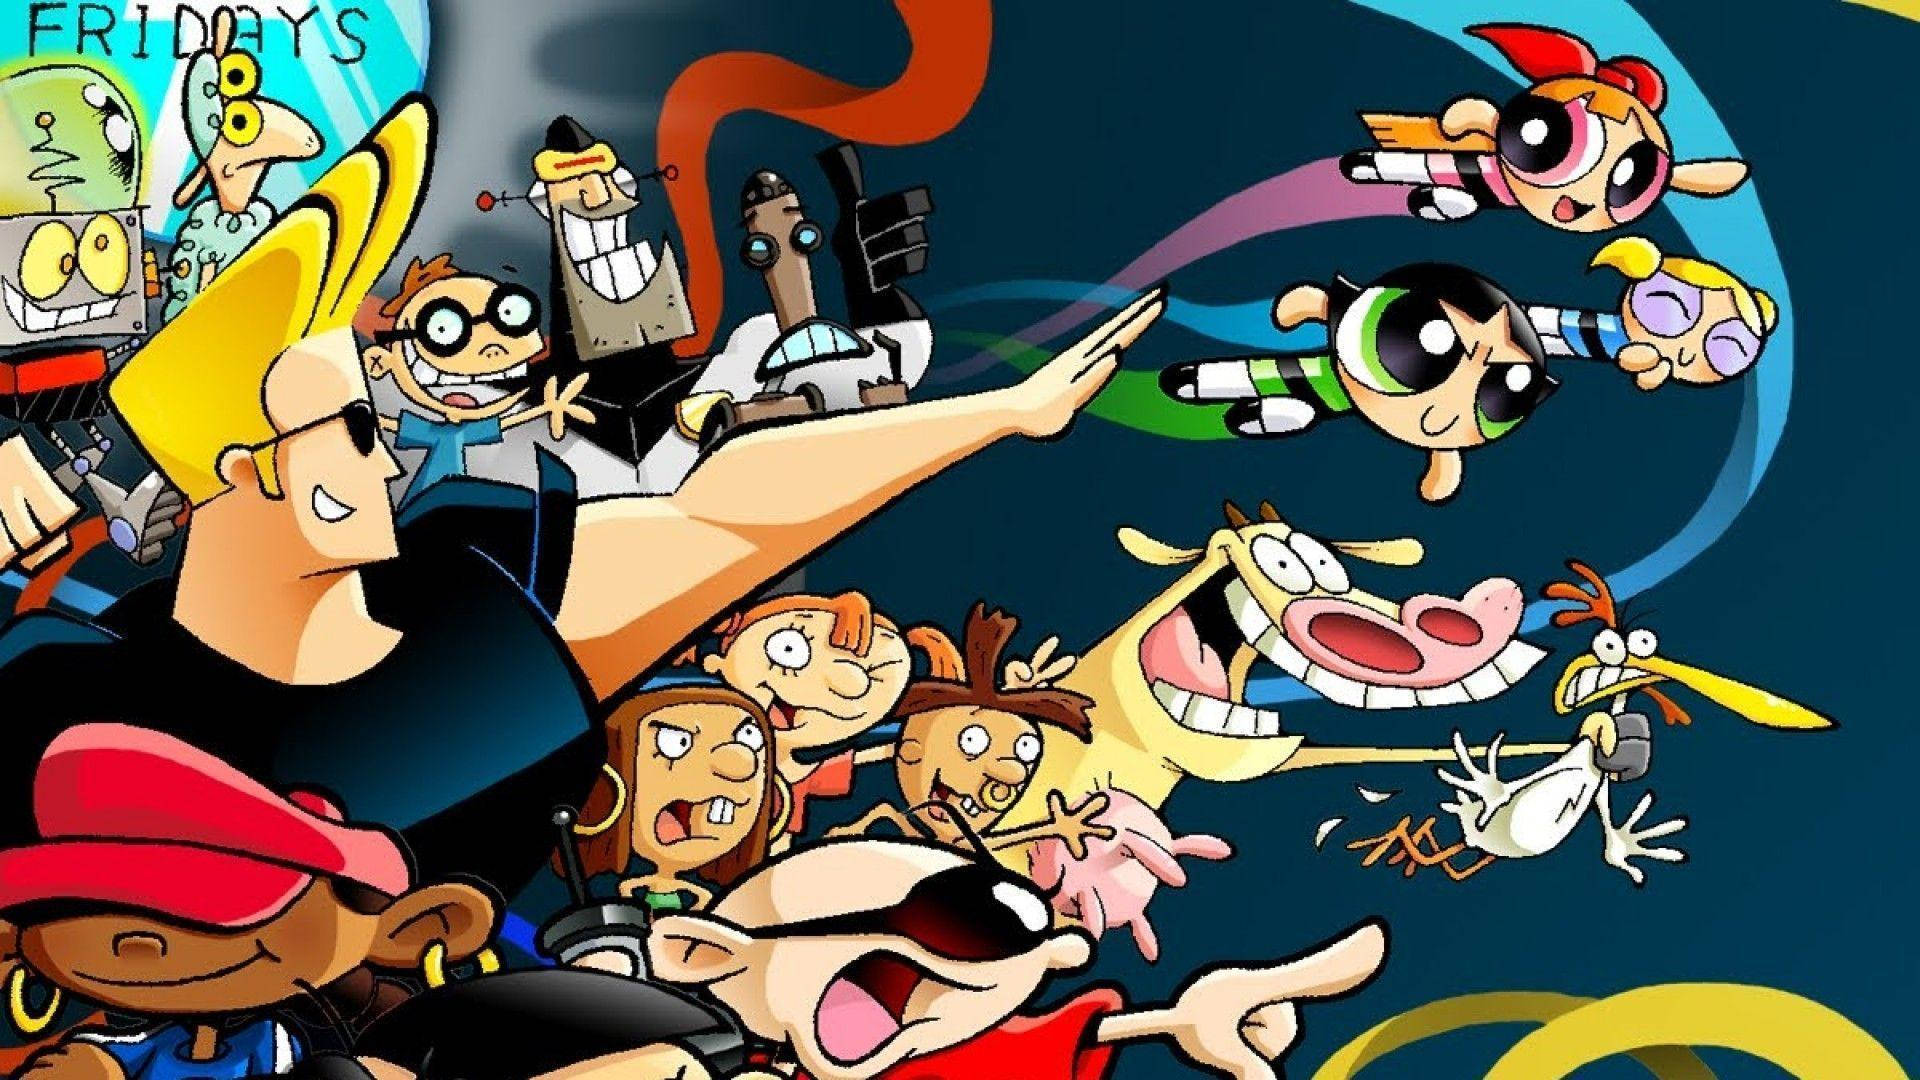 Free Cartoon Network Characters Wallpaper Downloads, [400+] Cartoon Network  Characters Wallpapers for FREE 